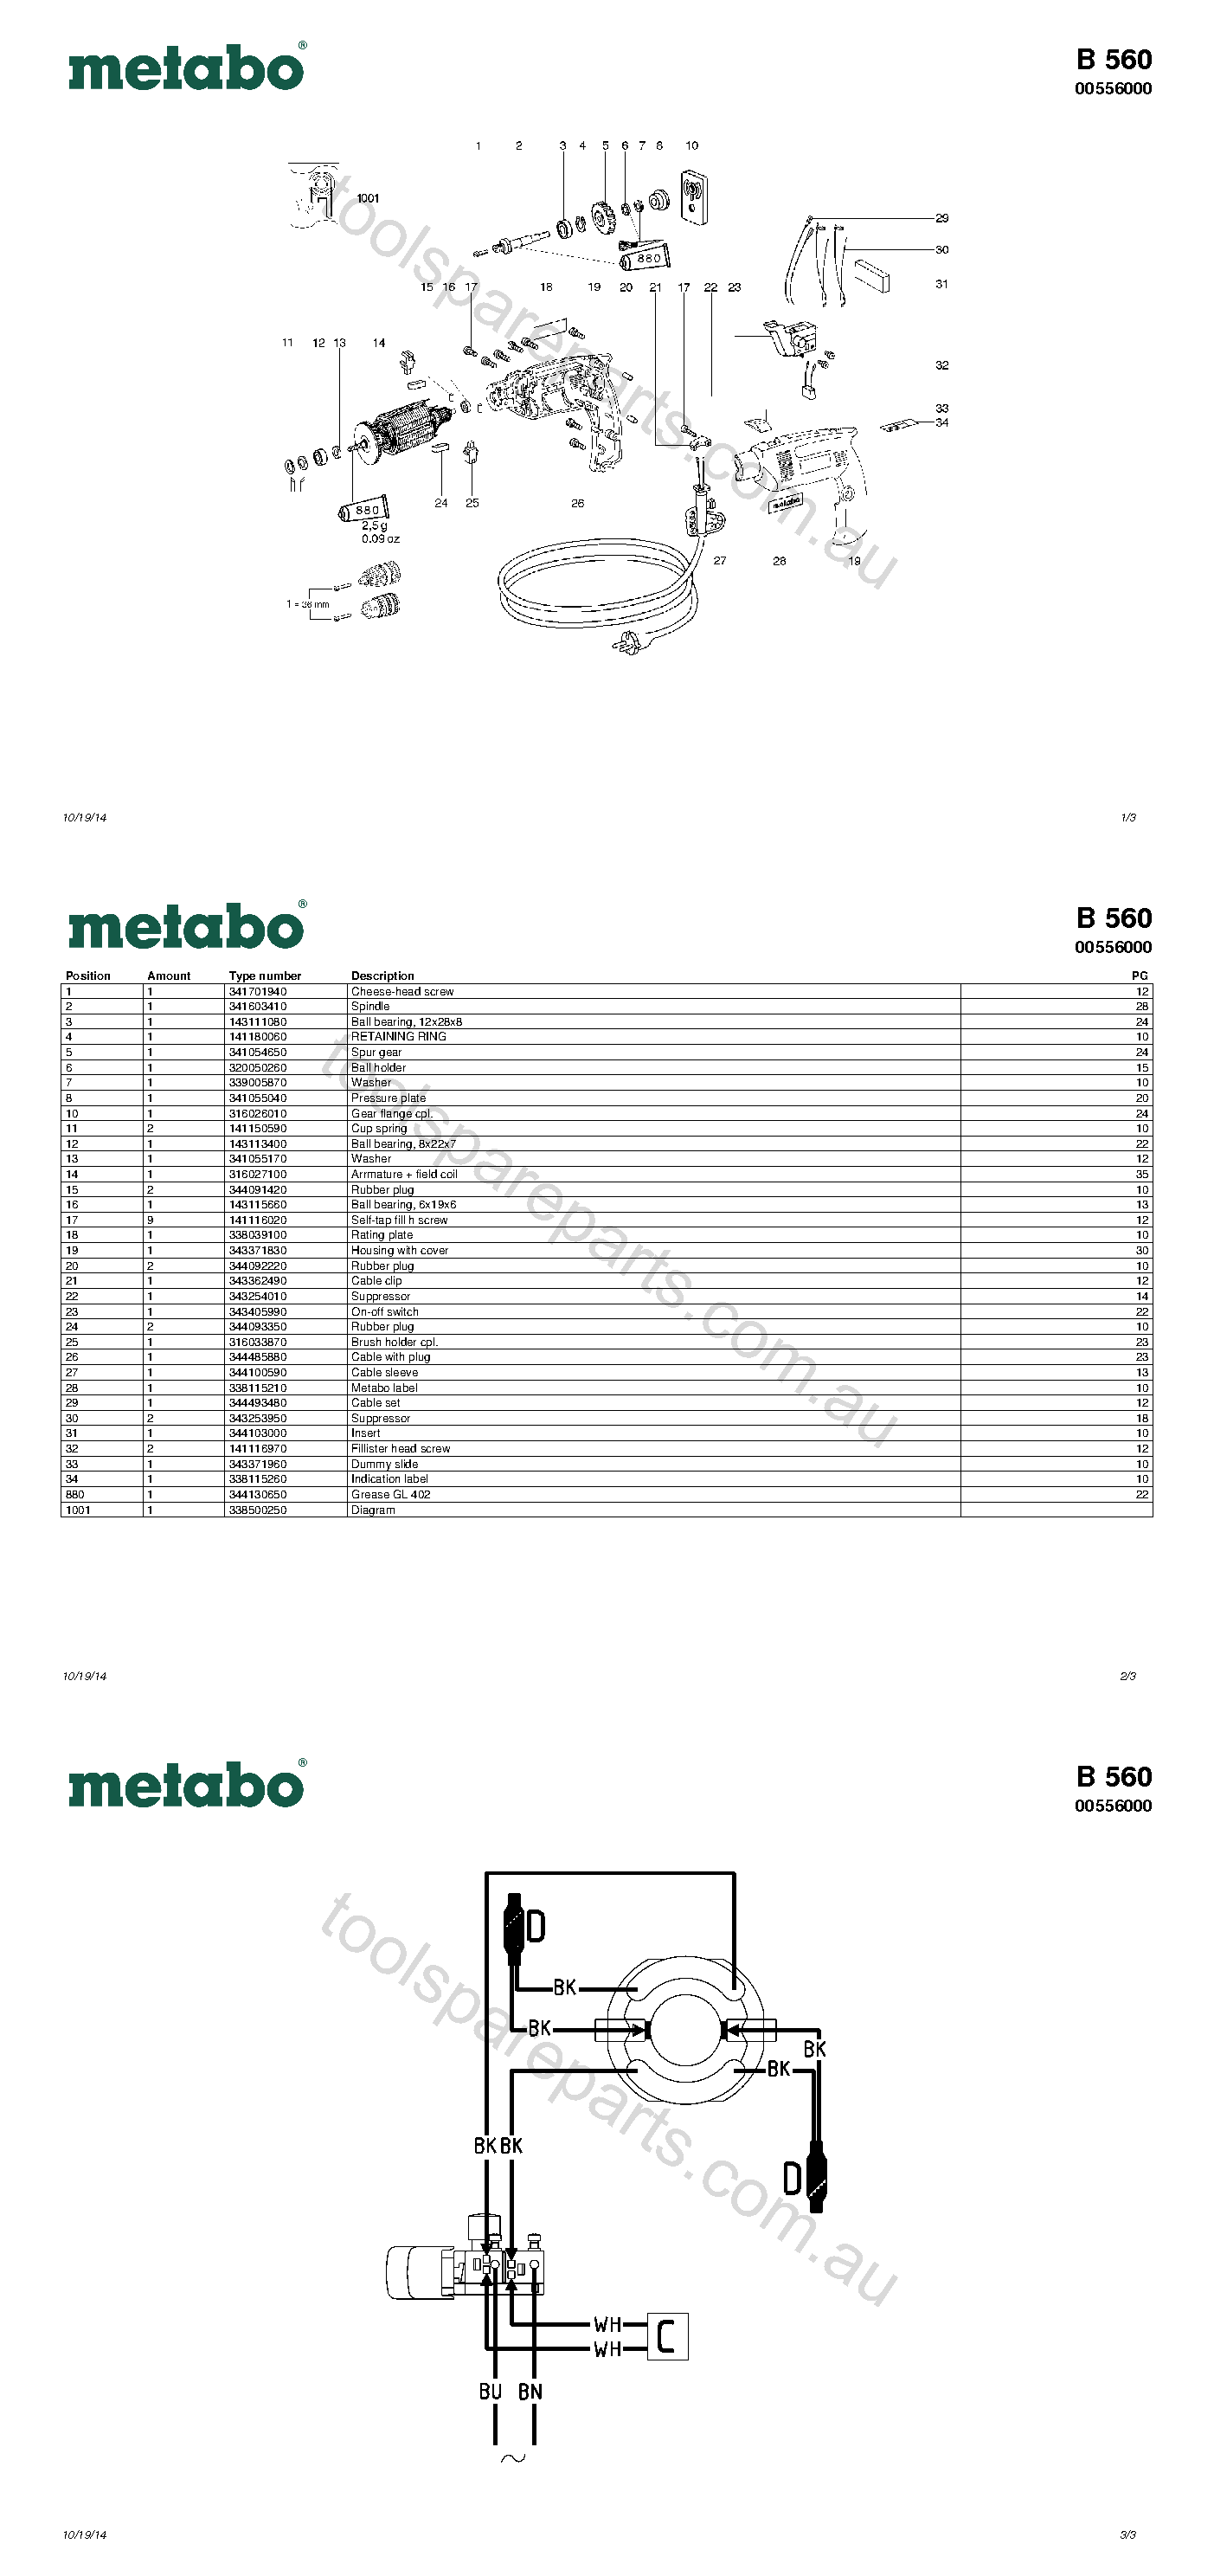 Metabo B 560 00556000  Diagram 1